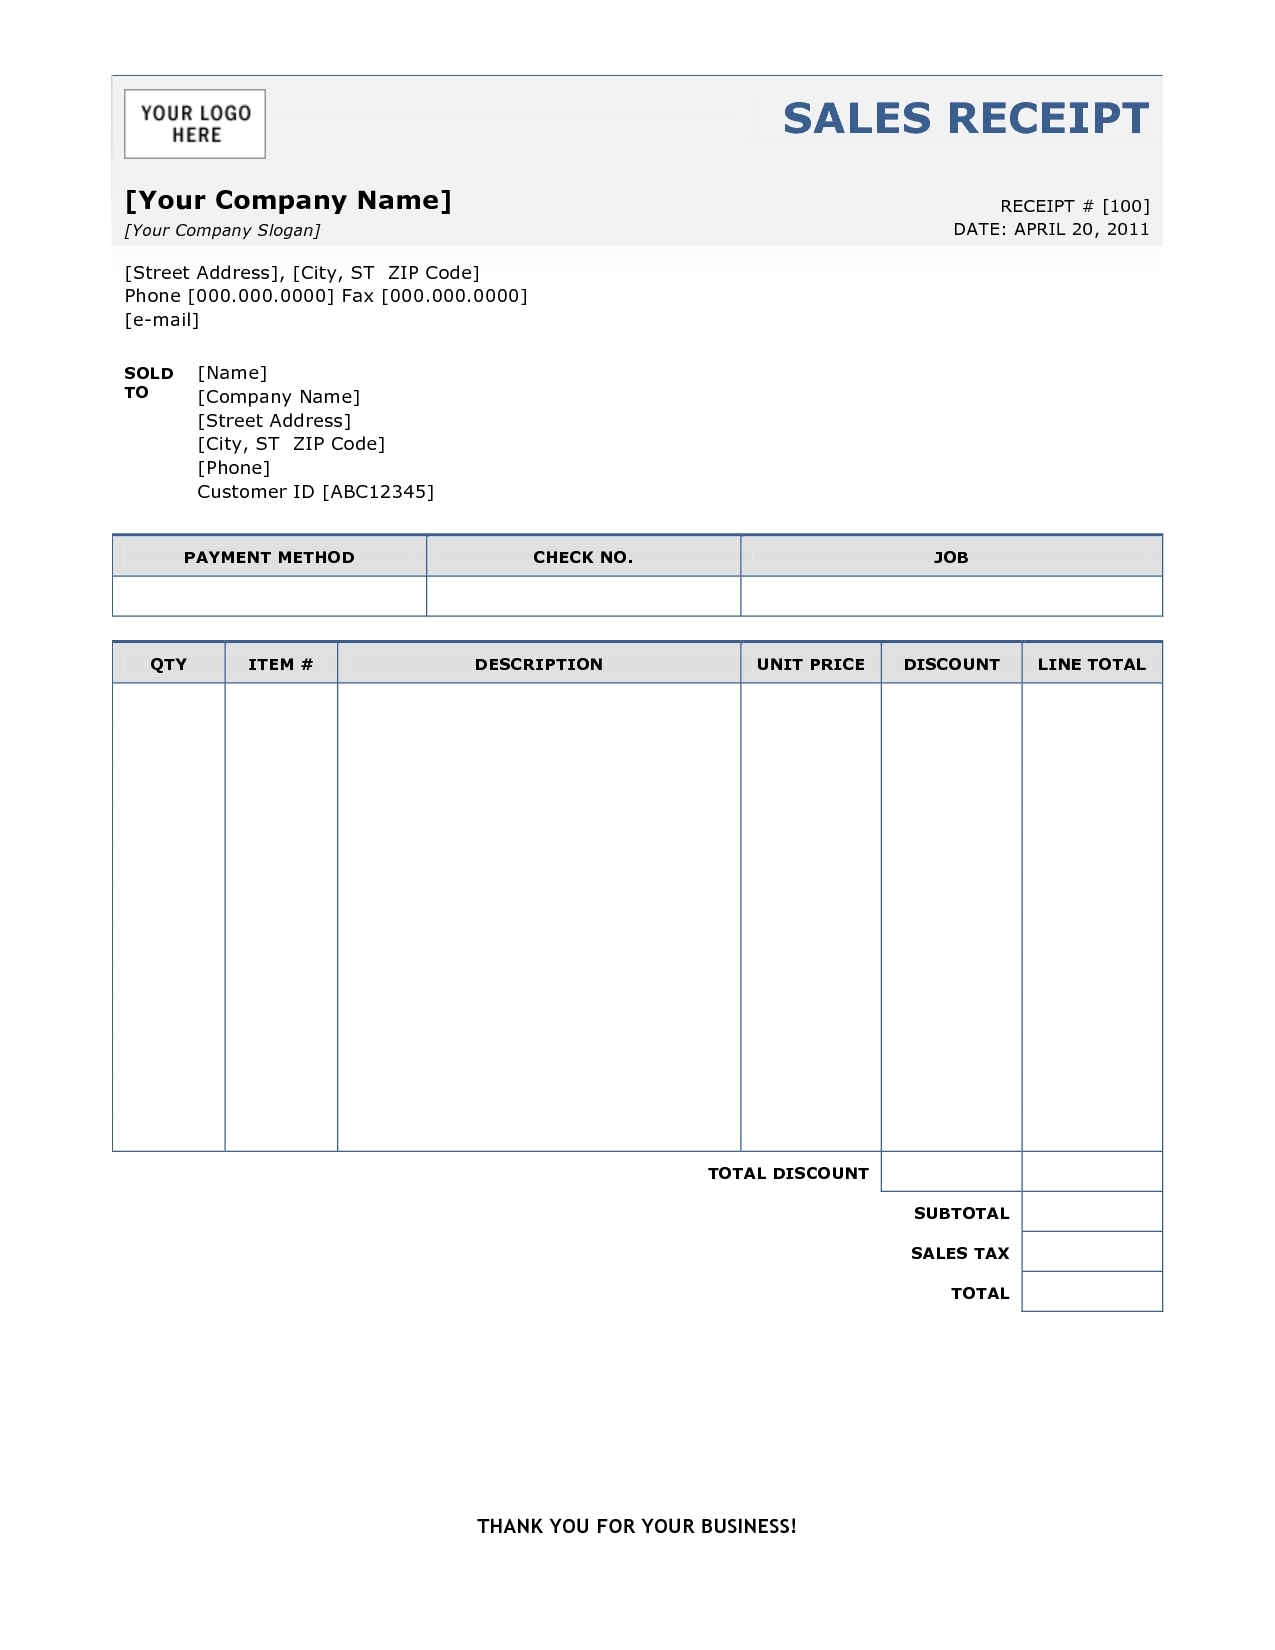 receipt-invoice-template-invoice-example